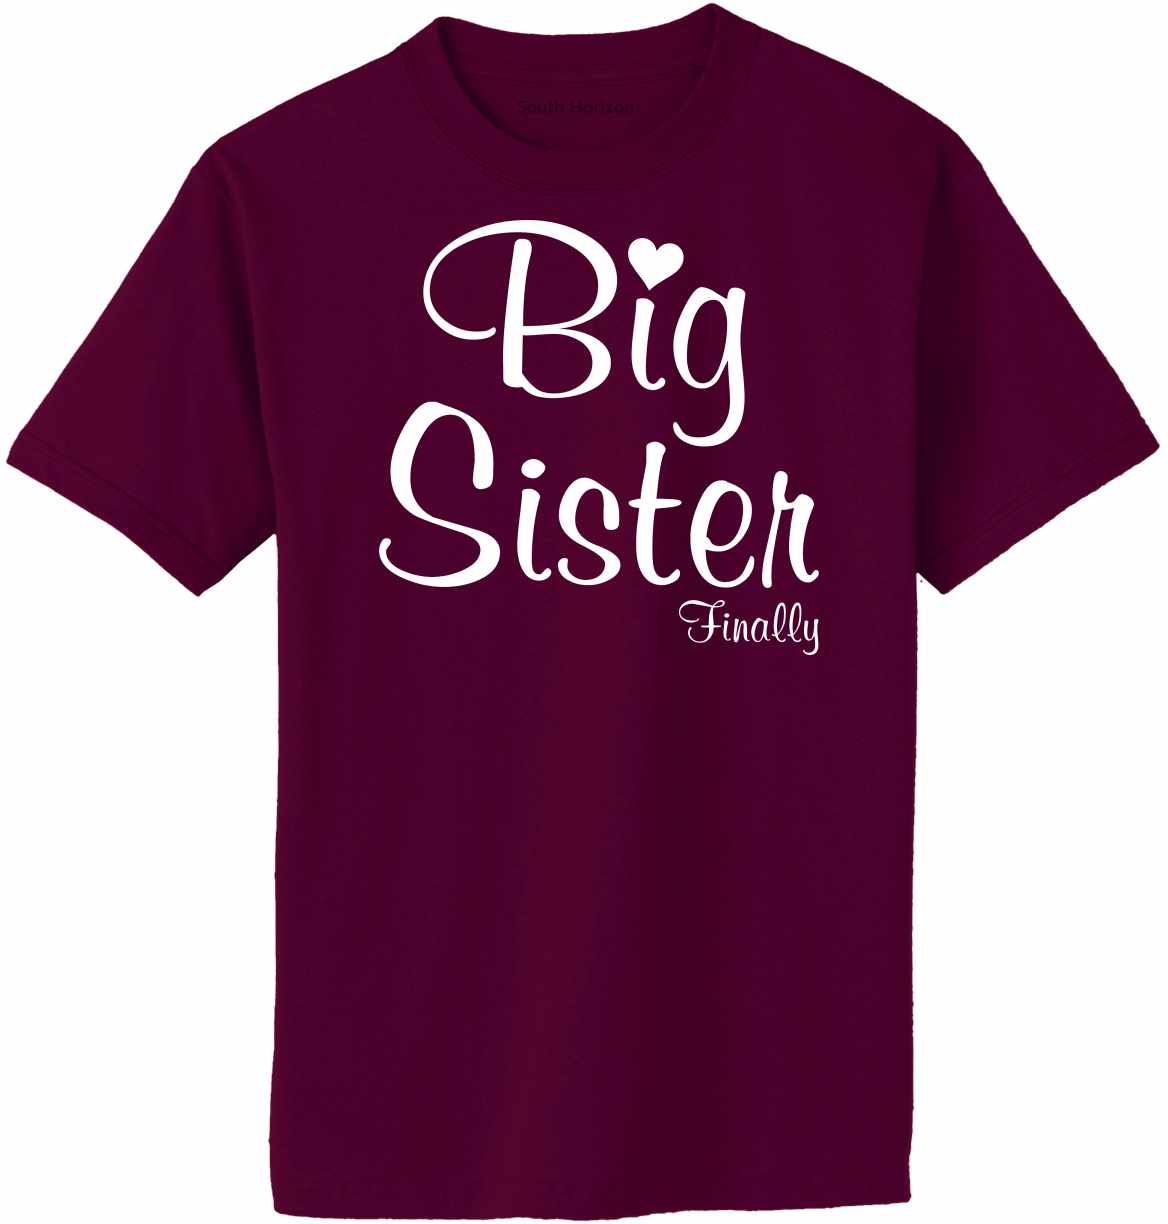 Big Sister Finally on Adult T-Shirt